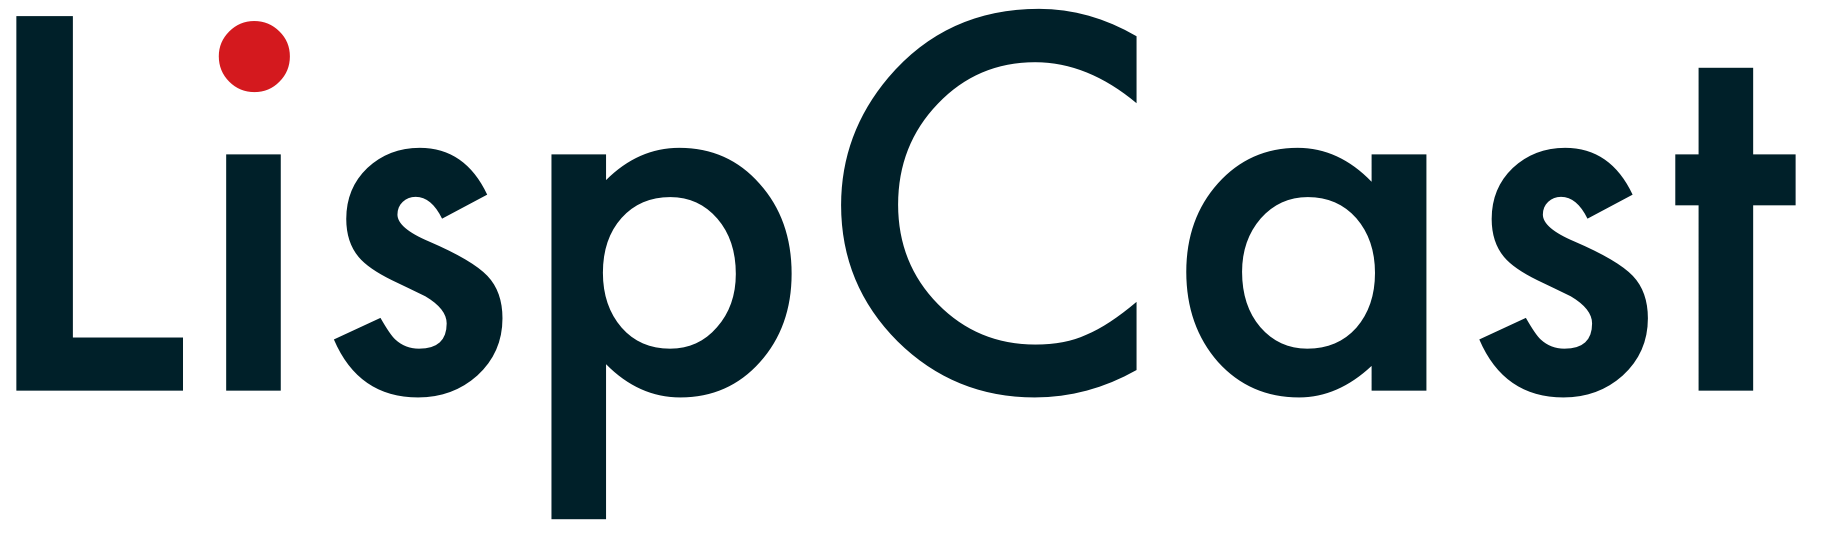 LispCast logo